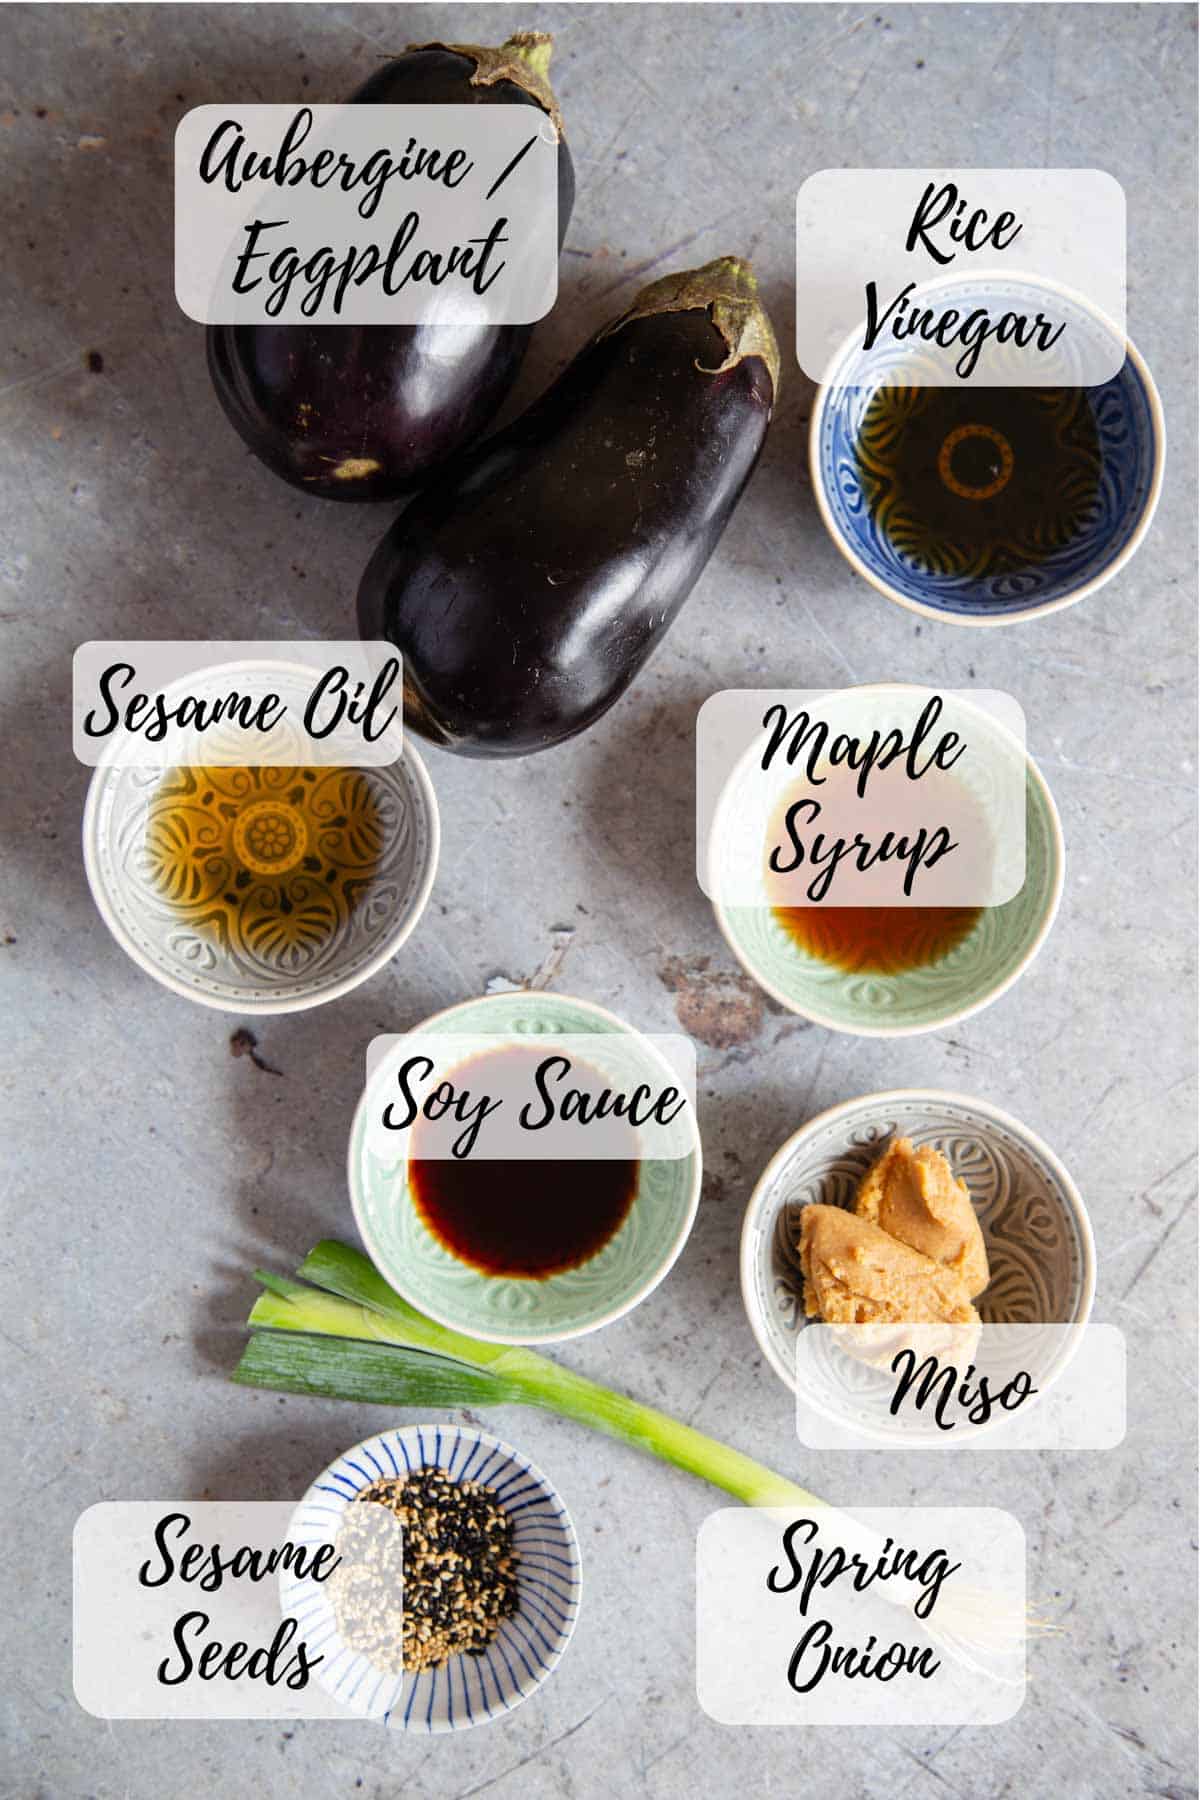 Ingredients for miso aubergine: aubergine/eggplant, rice vinegar, maple syrup, miso, spring onion, sesame seeds, soy sauce, sesame oil.